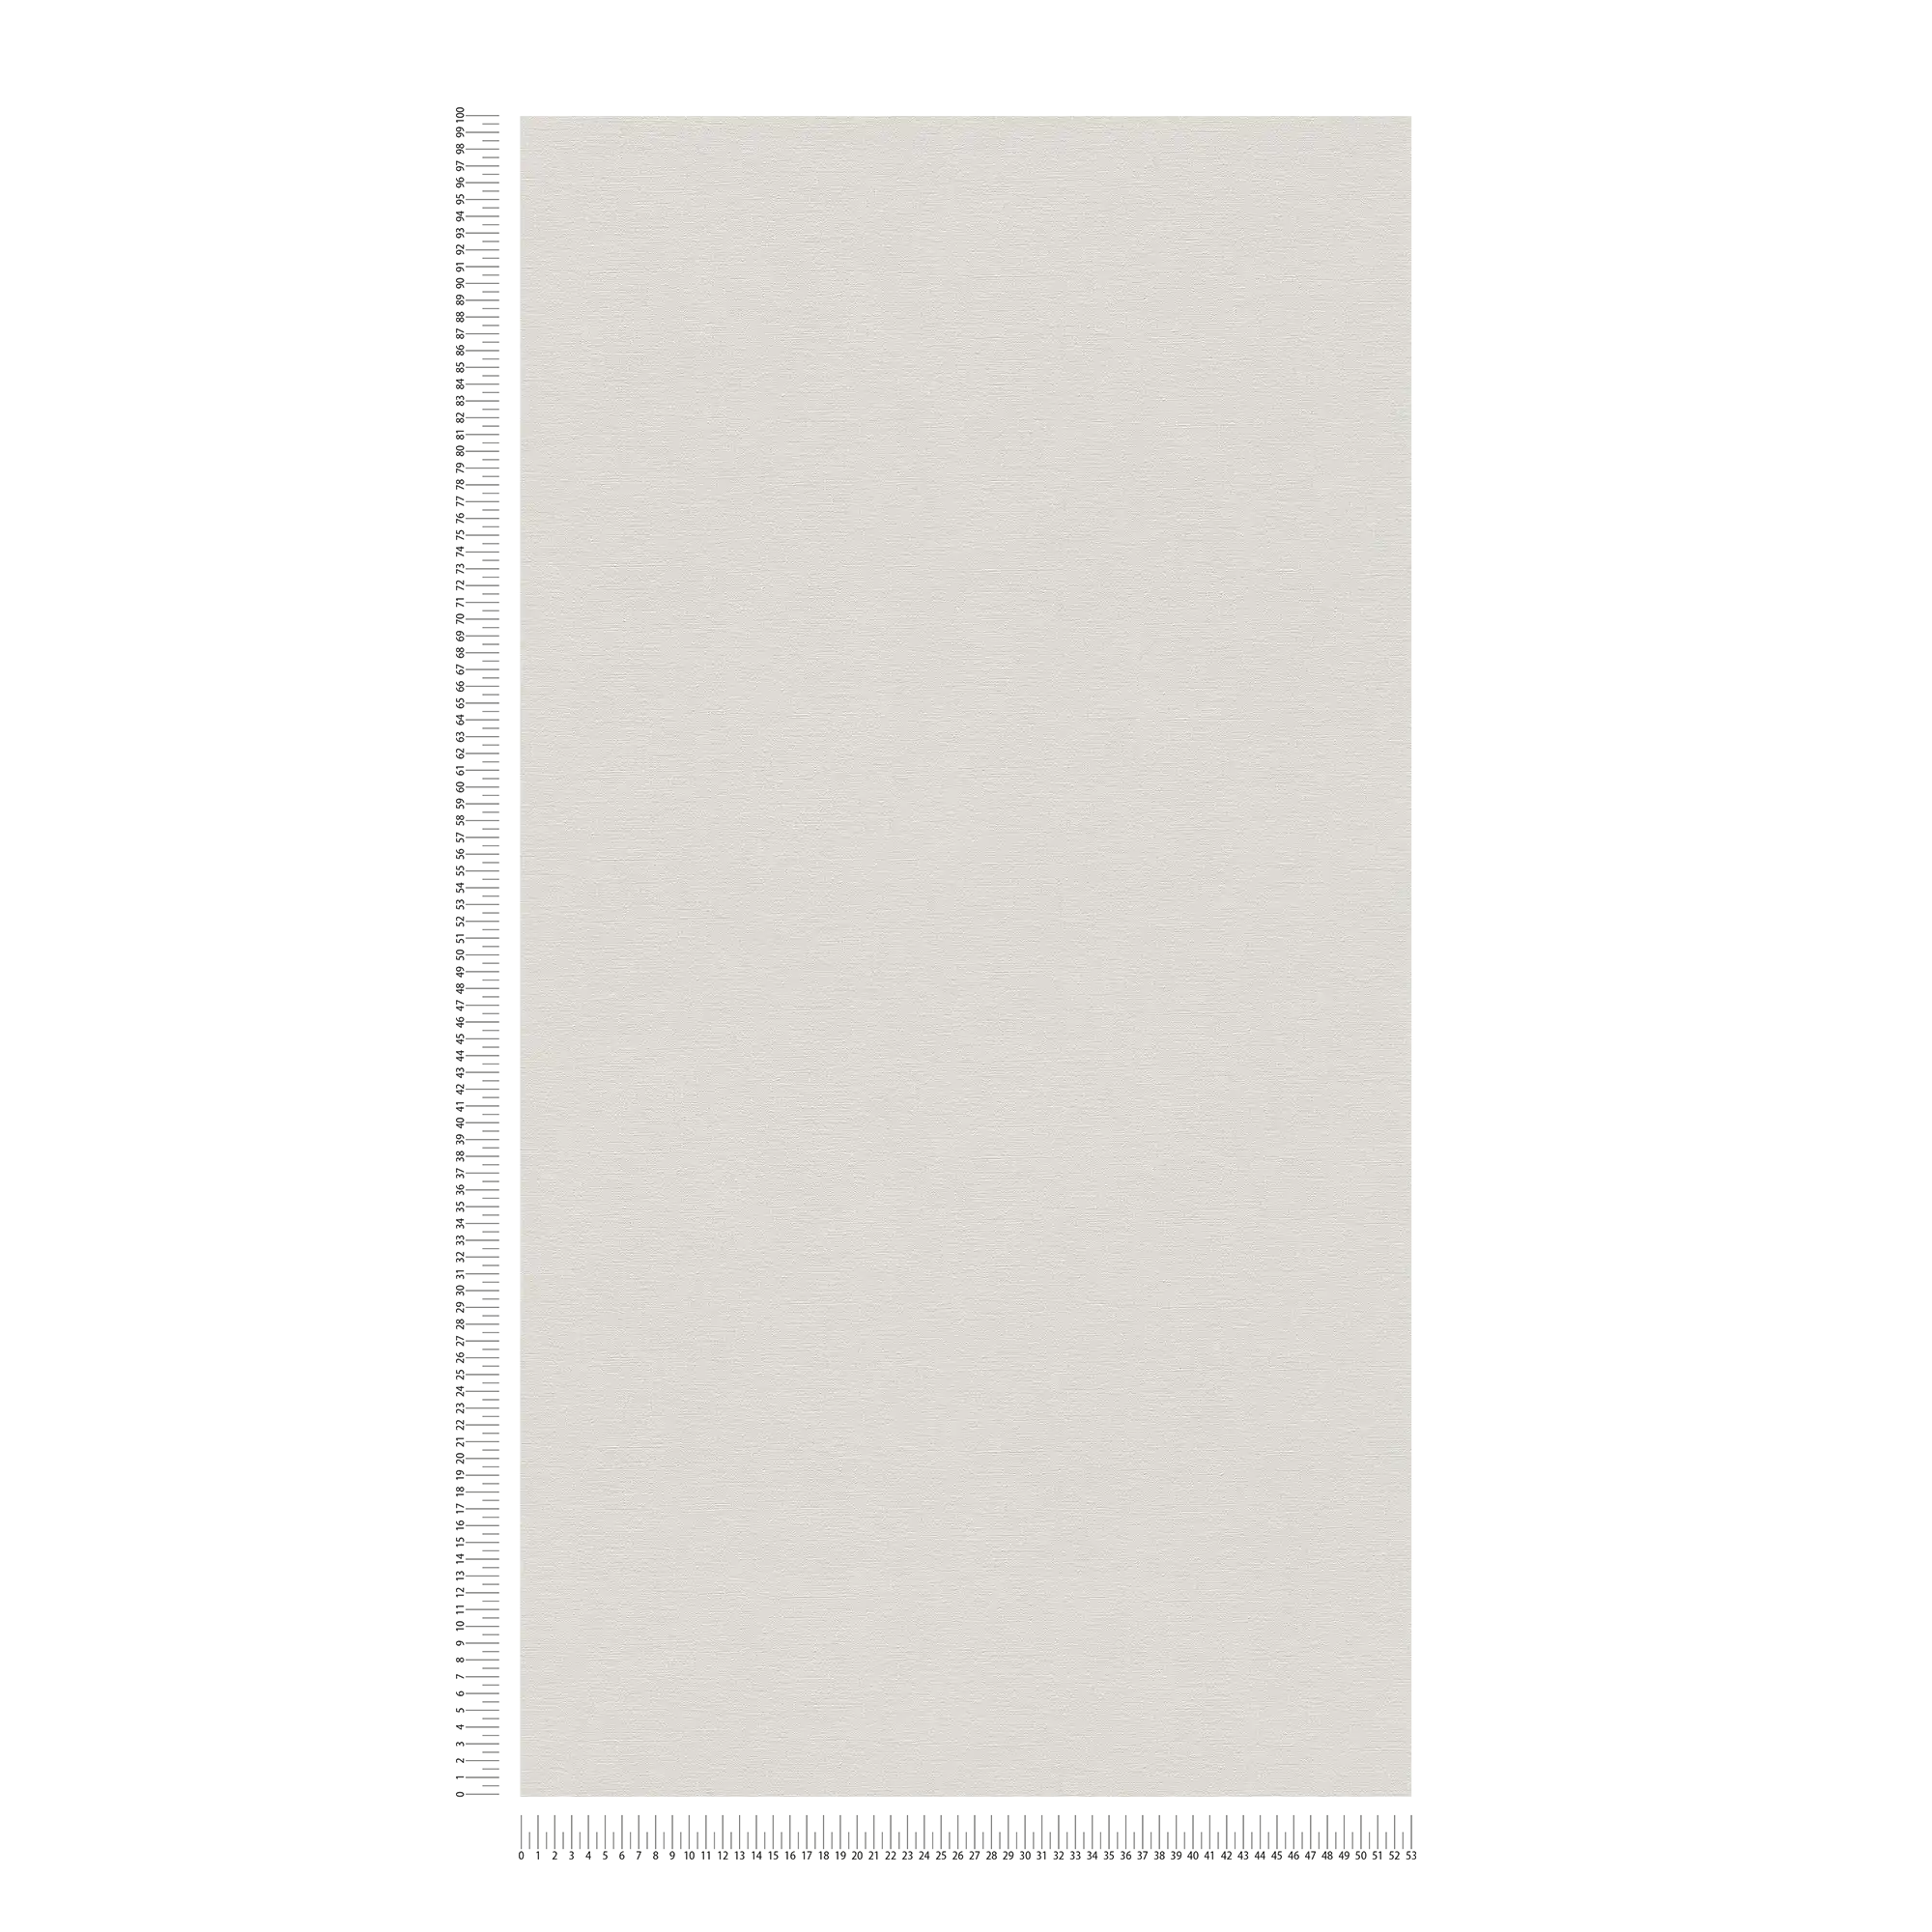             Plain wallpaper with a light textured look - grey
        